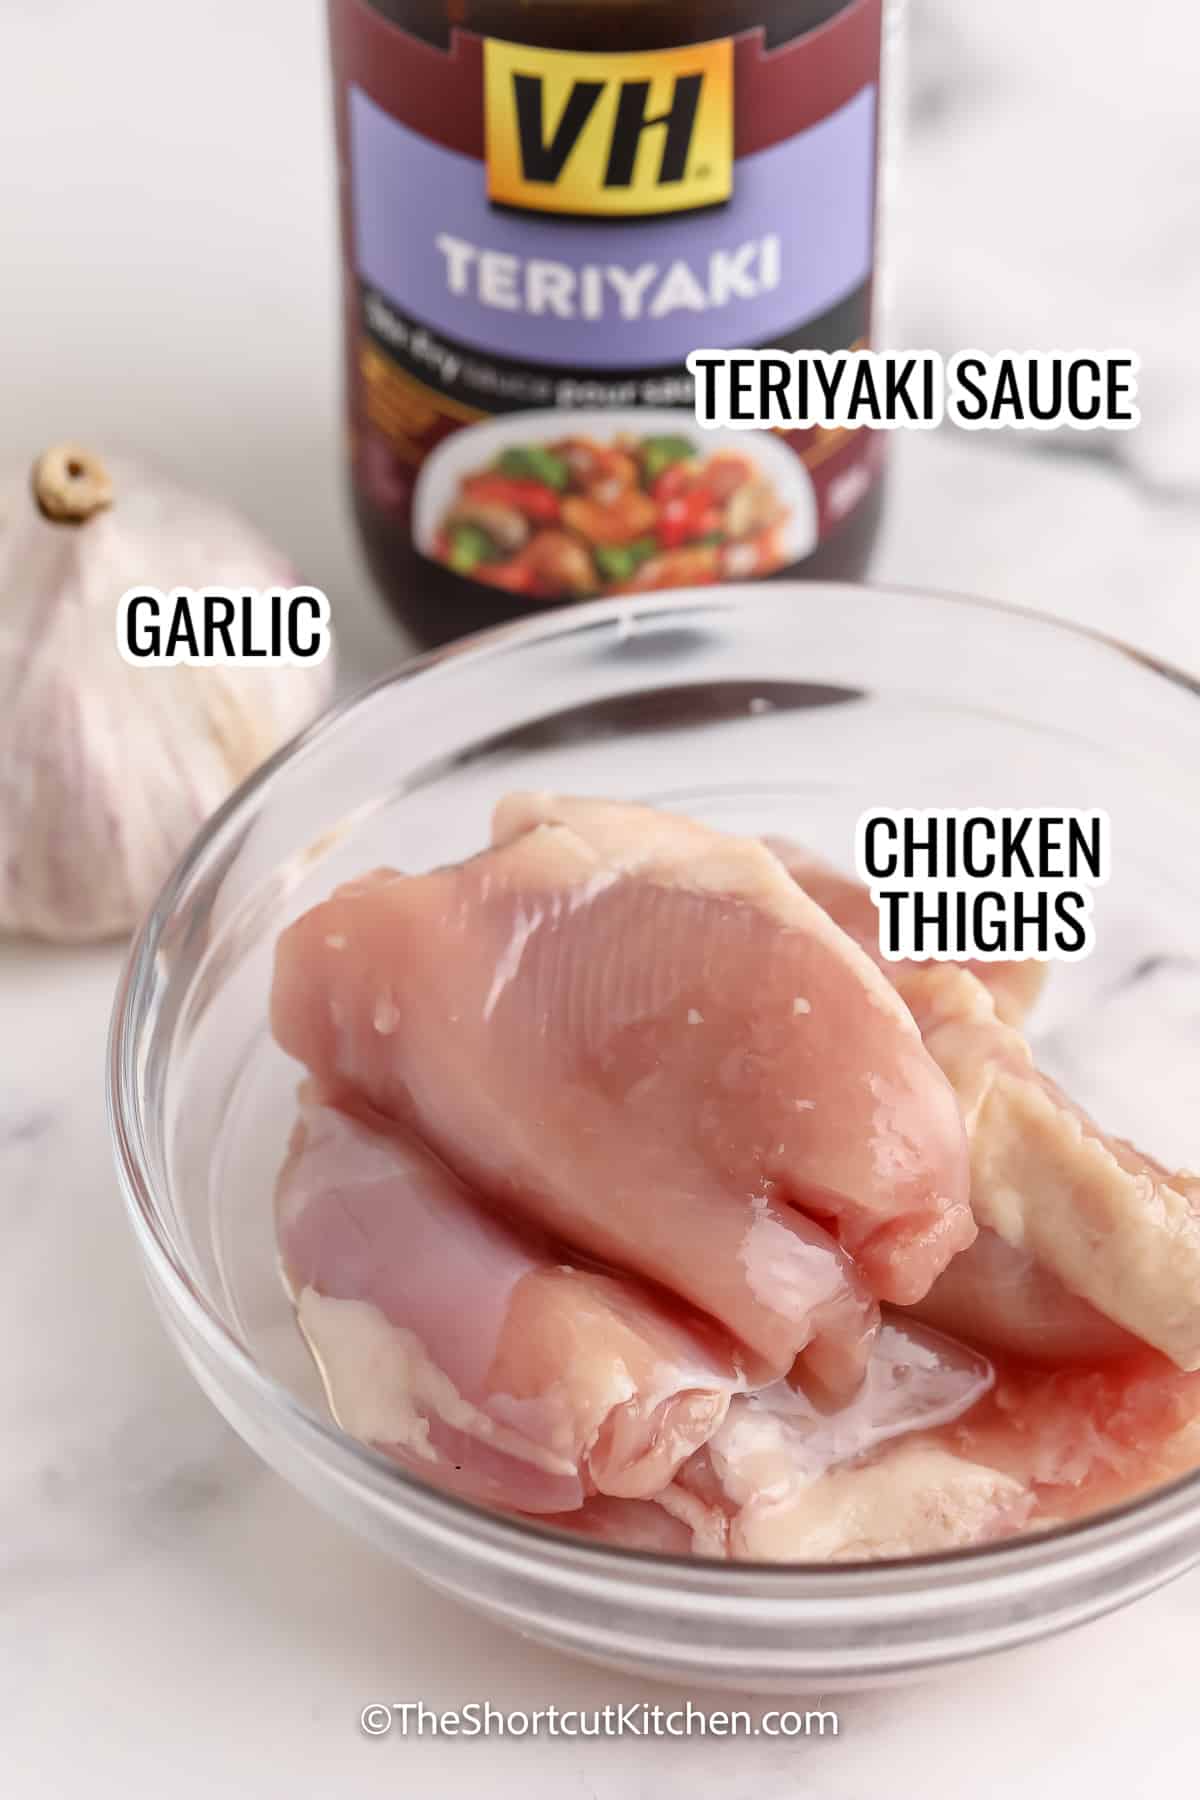 ingredients assembled to make teriyaki chicken thighs, including chicken thighs, teriyaki, and garlic